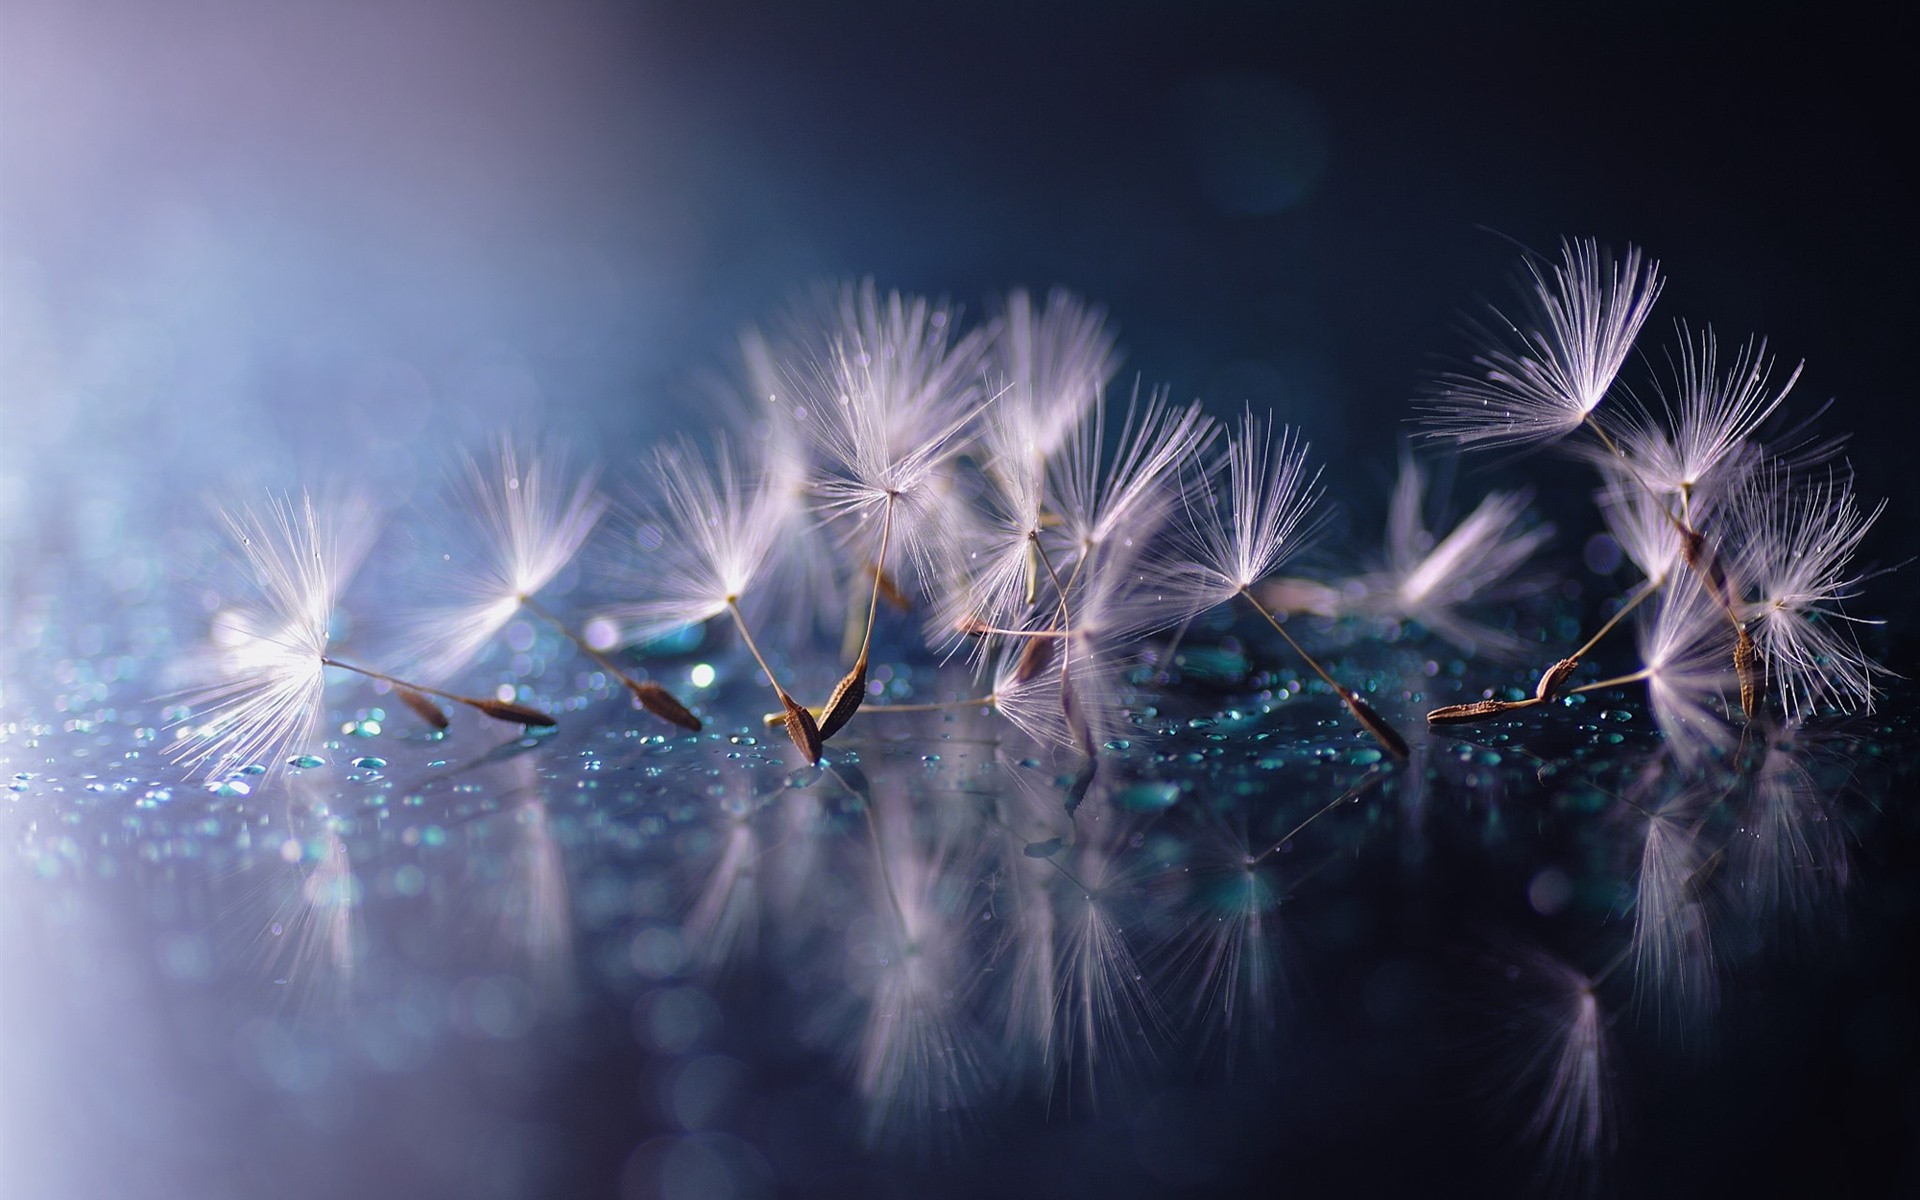 Dandelion seeds close-up on wet glass